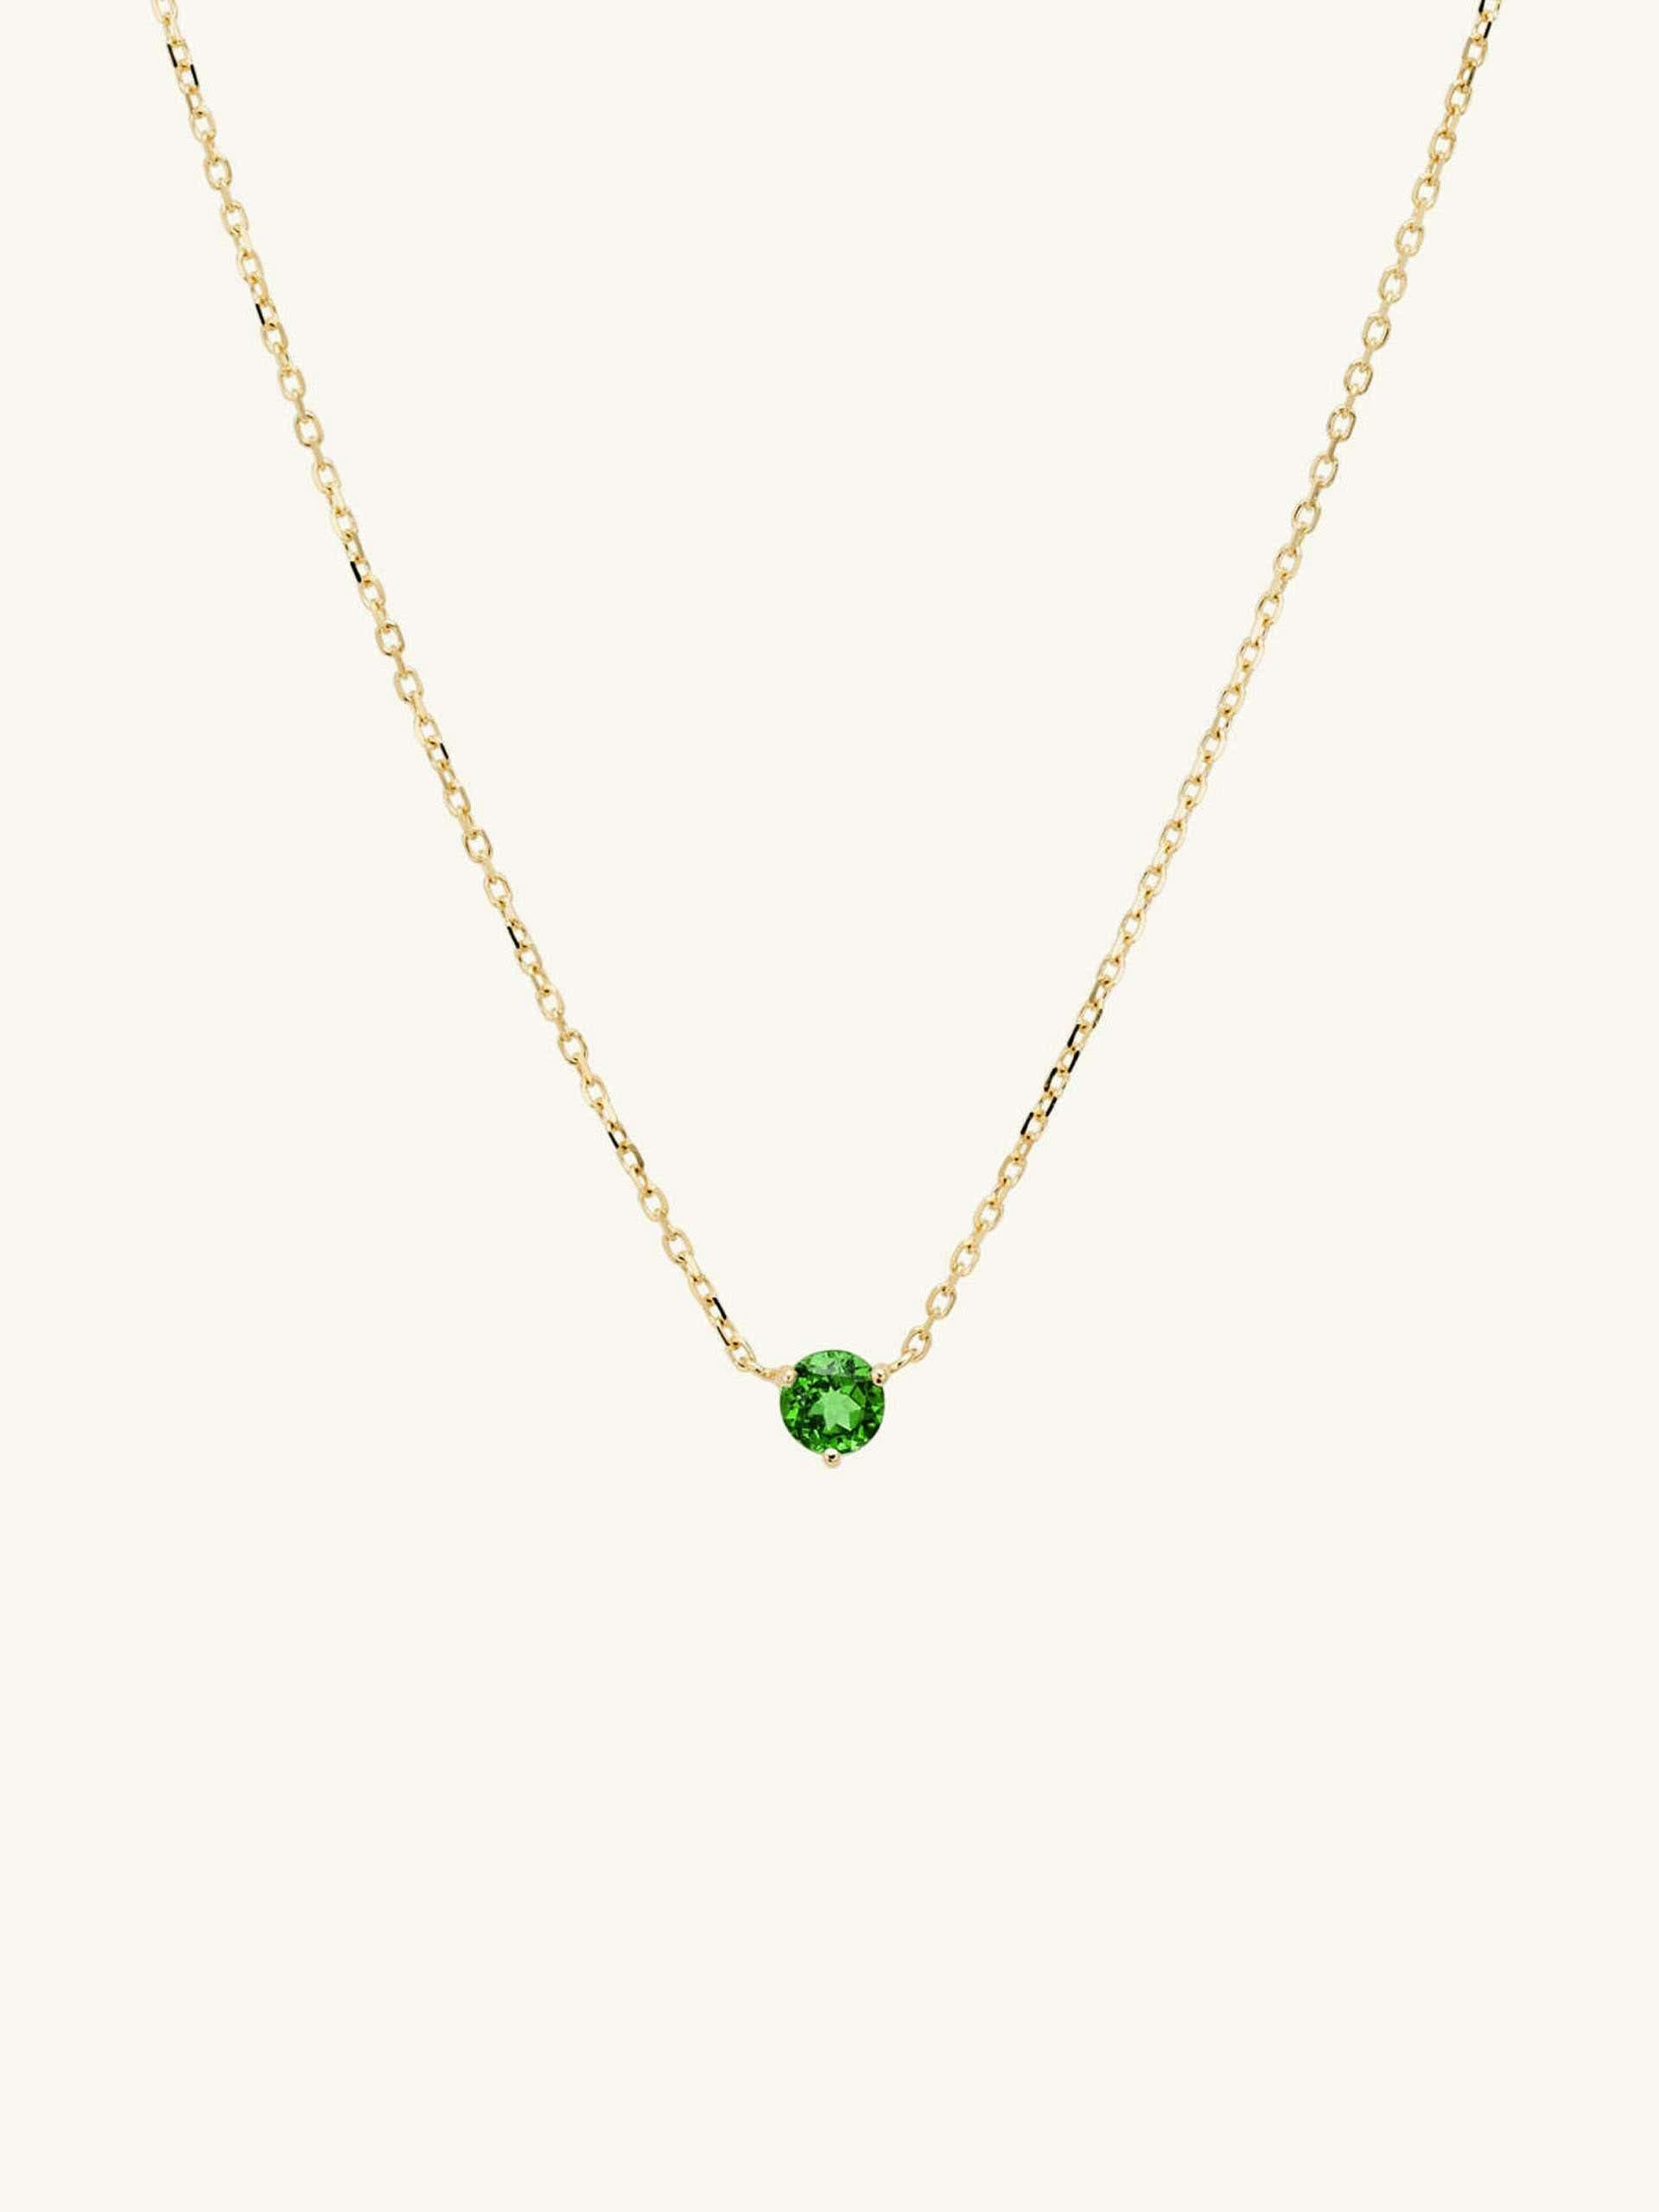 Gemstone necklace